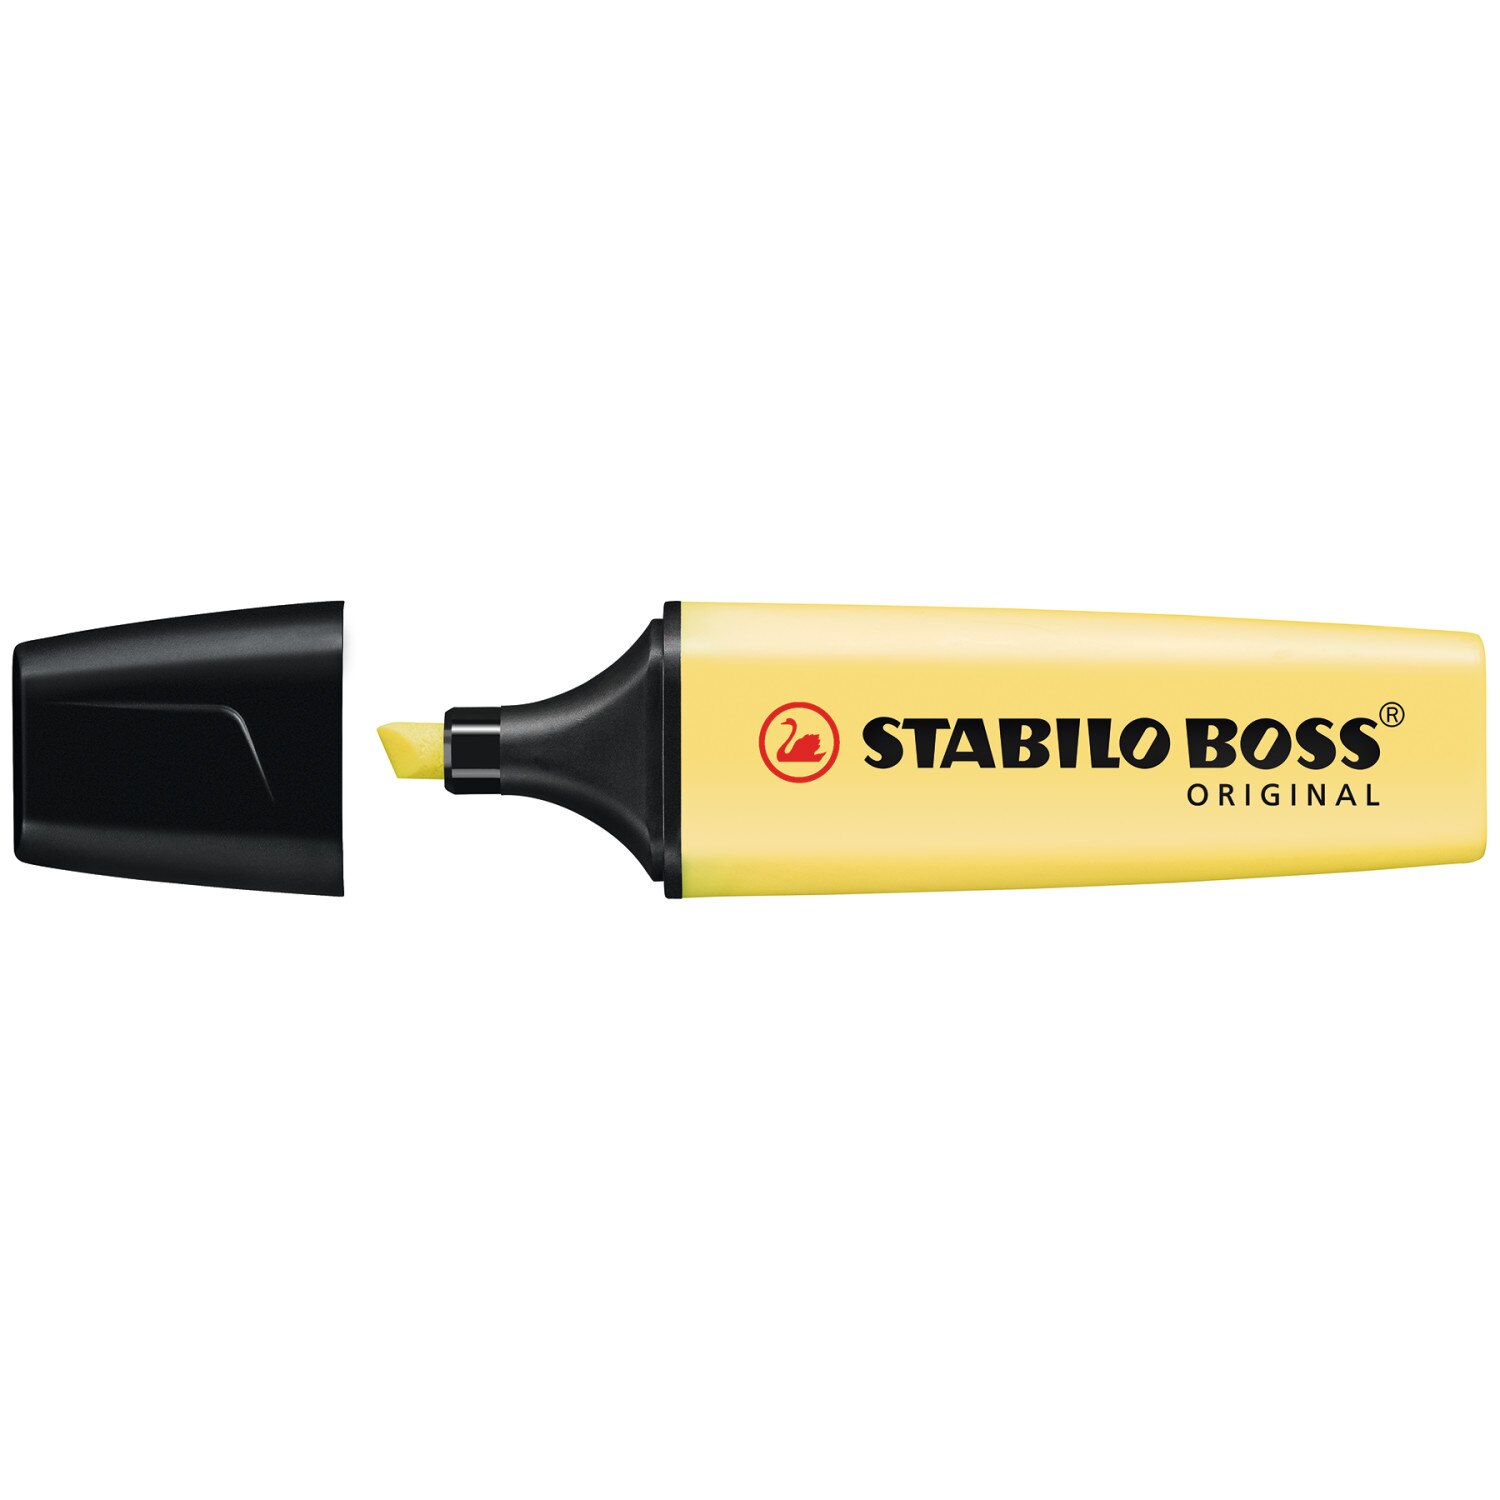 STABILO BOSS Original Pastel Highlighter, Milky Yellow